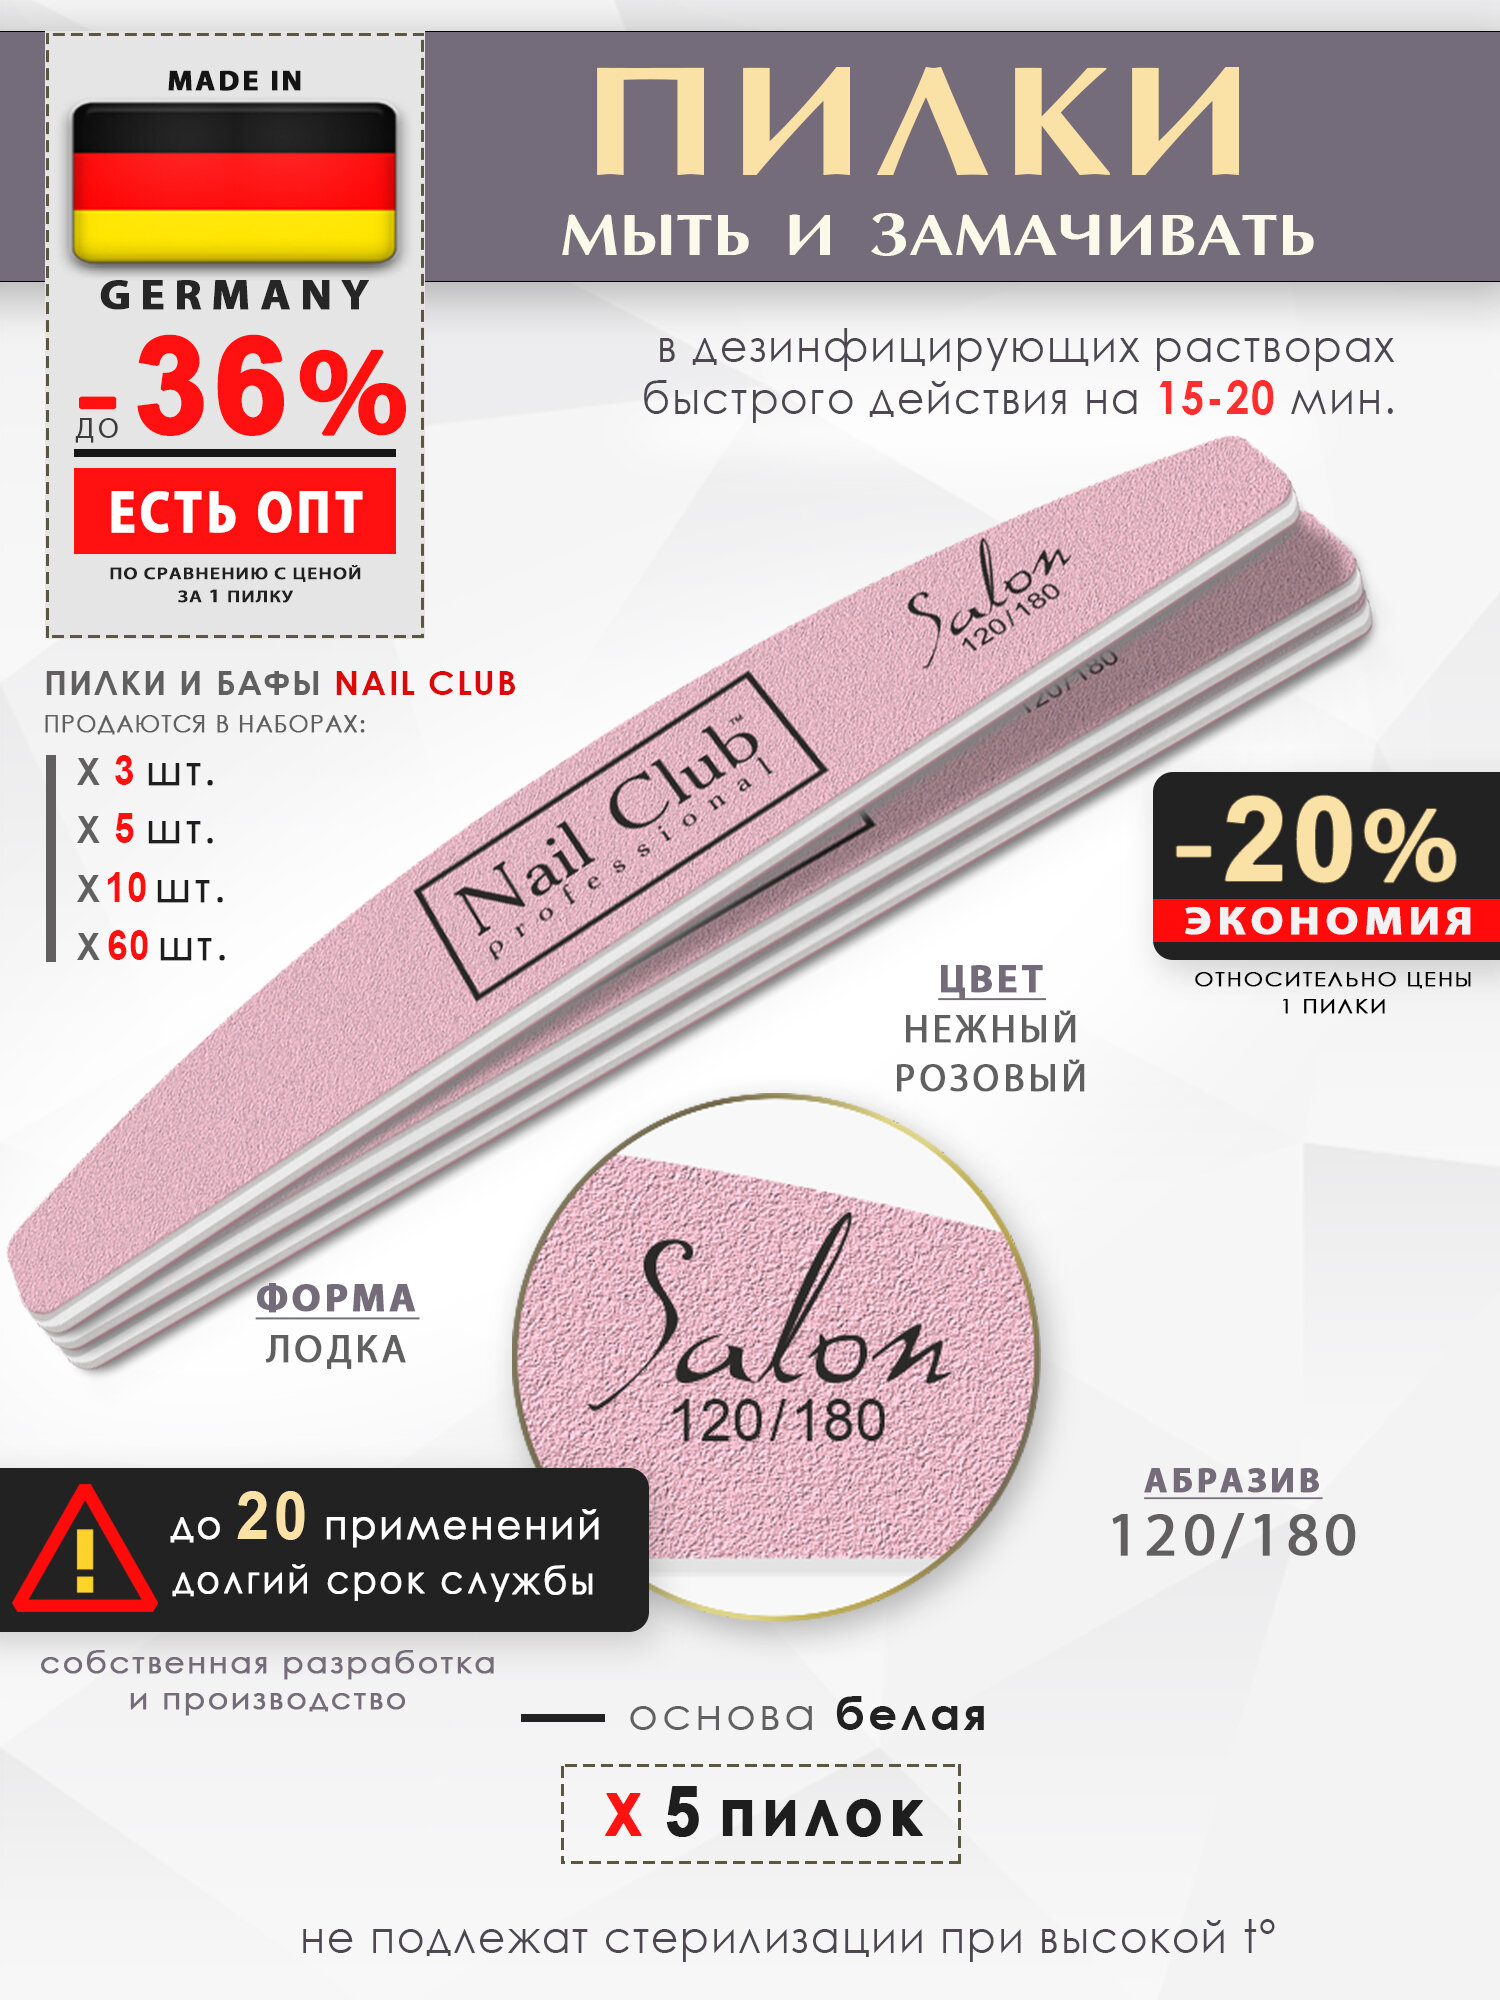 Nail Club professional Маникюрная пилка для опила ногтей розовая, серия Salon, форма лодка, абразив 120/180, 5 шт.